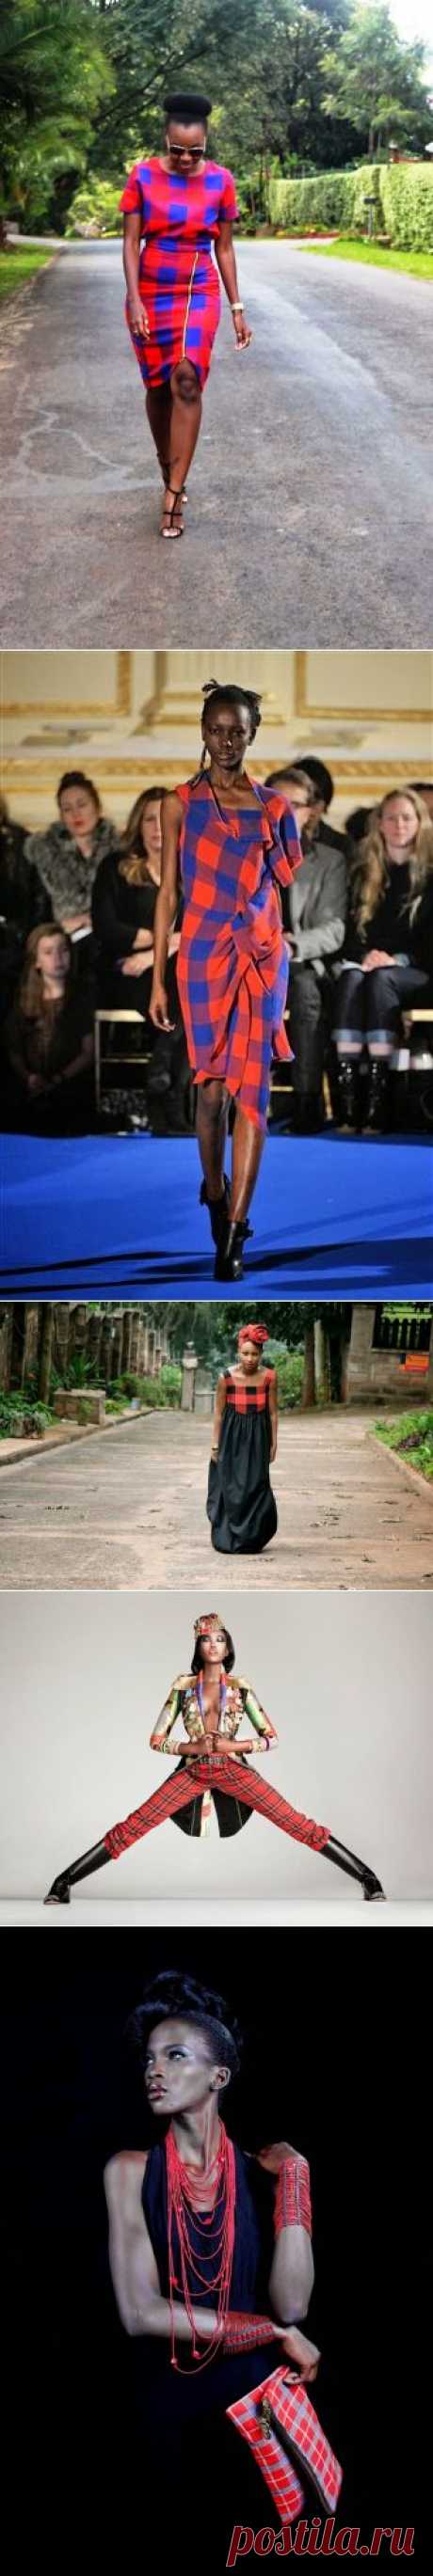 Trending Right Now: Maasai Prints /Tartan/Plaid | African Prints in Fashion